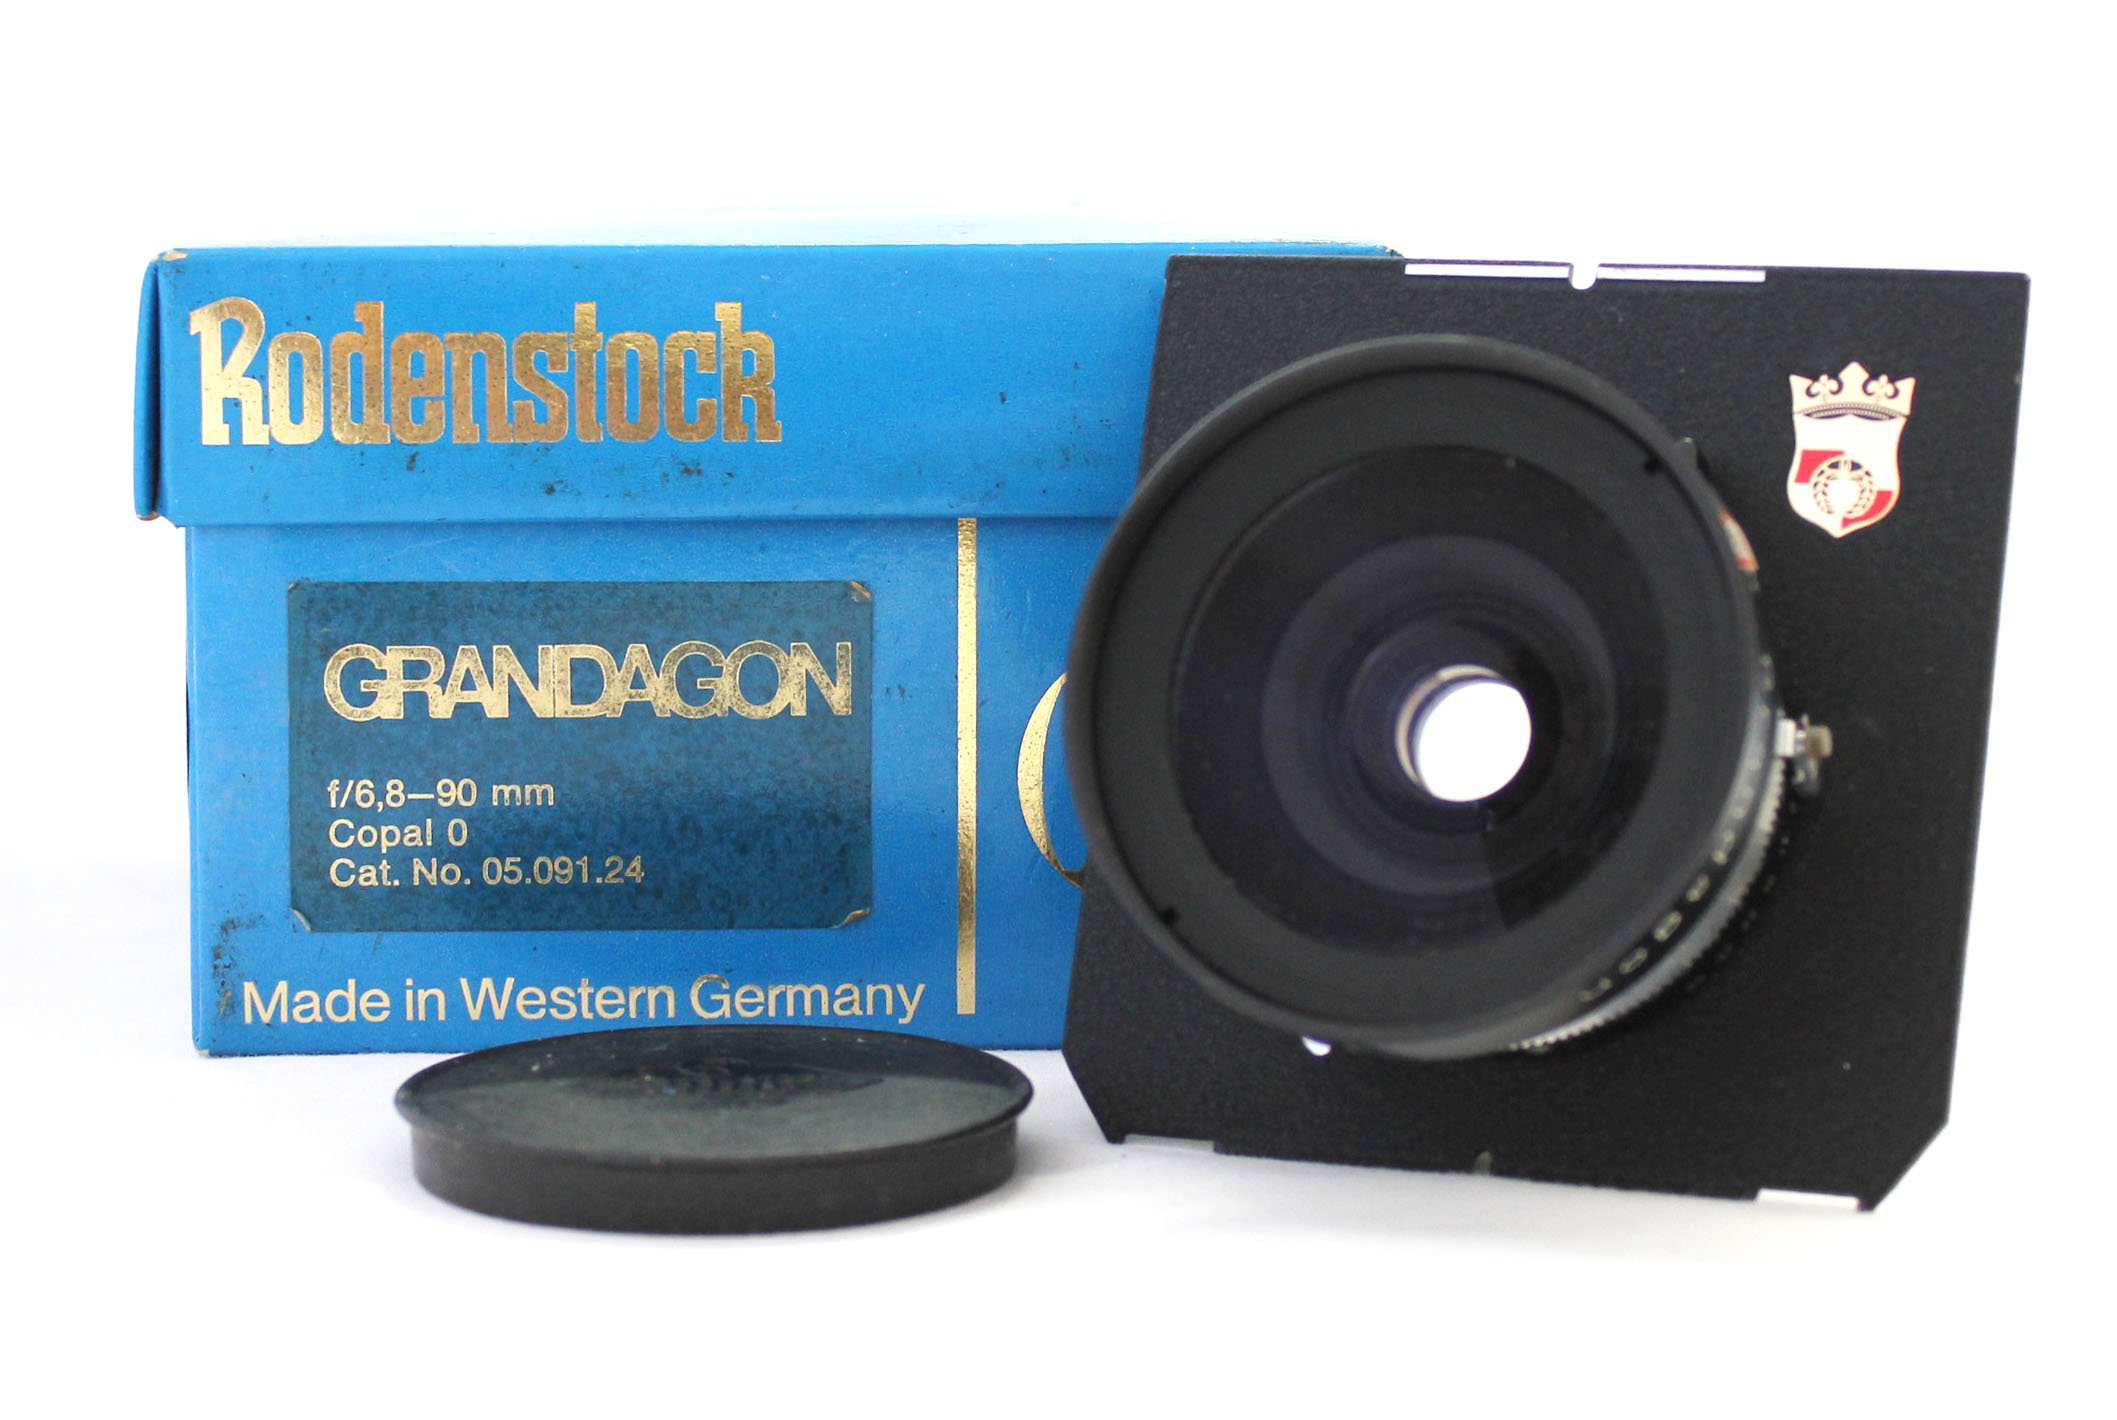 Rodenstock Grandagon 90mm F/6.8 Lens Copal No.0 Shutter in Box from Japan Photo 0